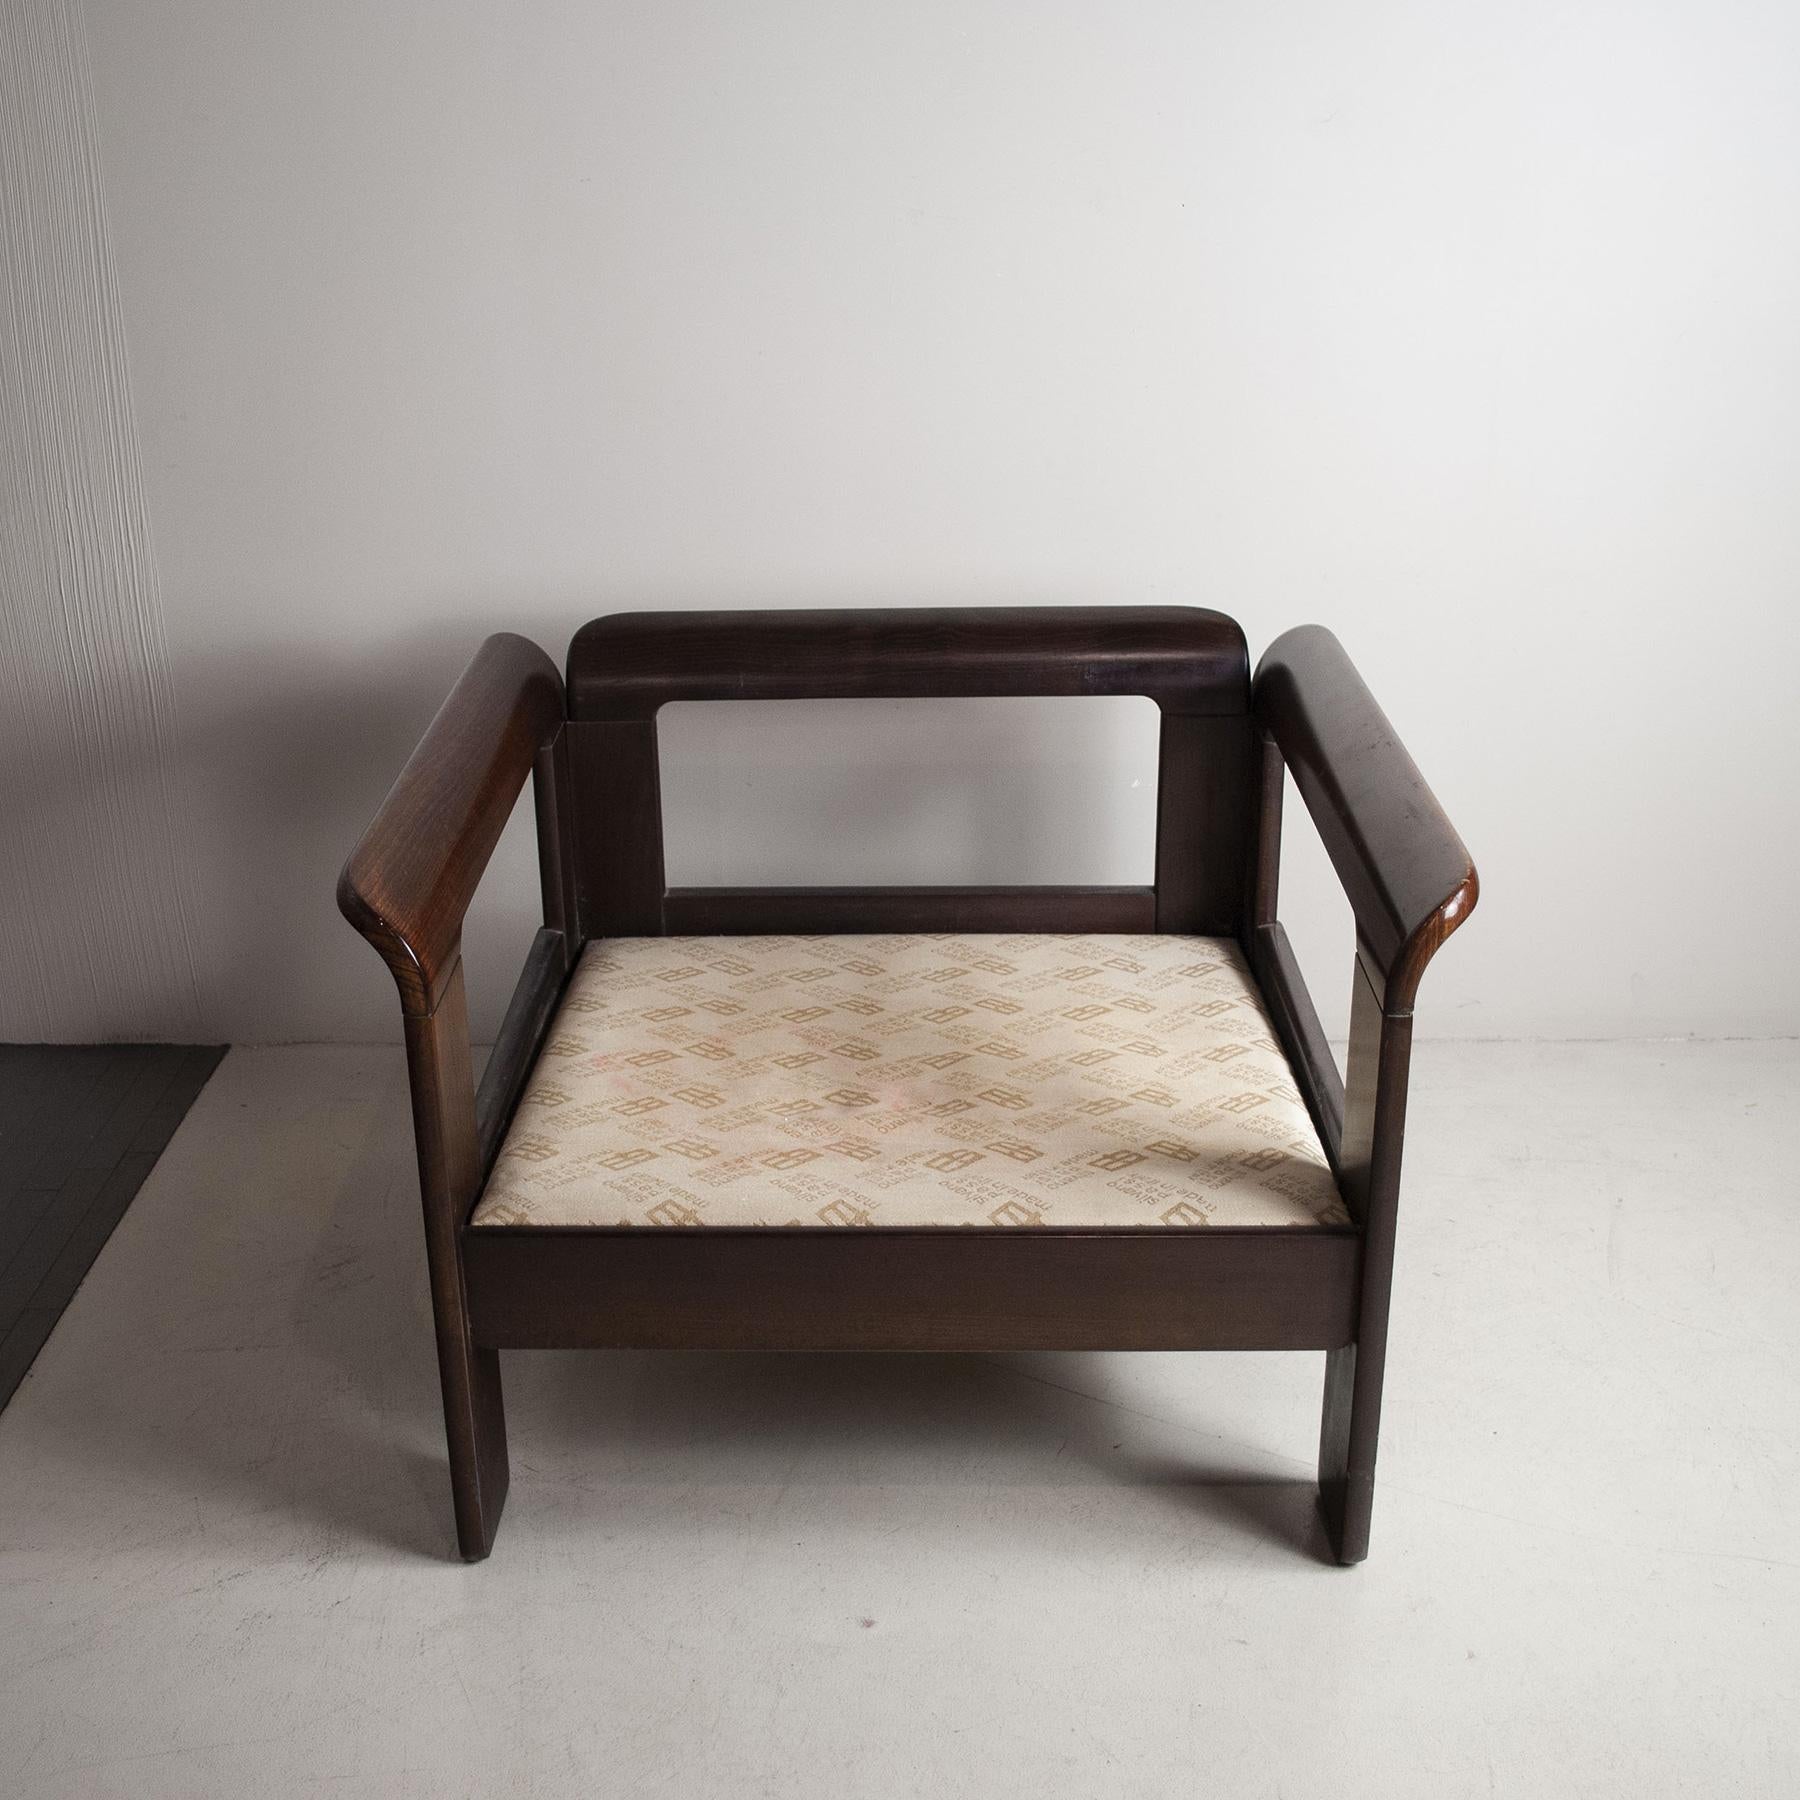 Armchair walnut wood frame fabric seats production 1970s designer Silvano Passi.